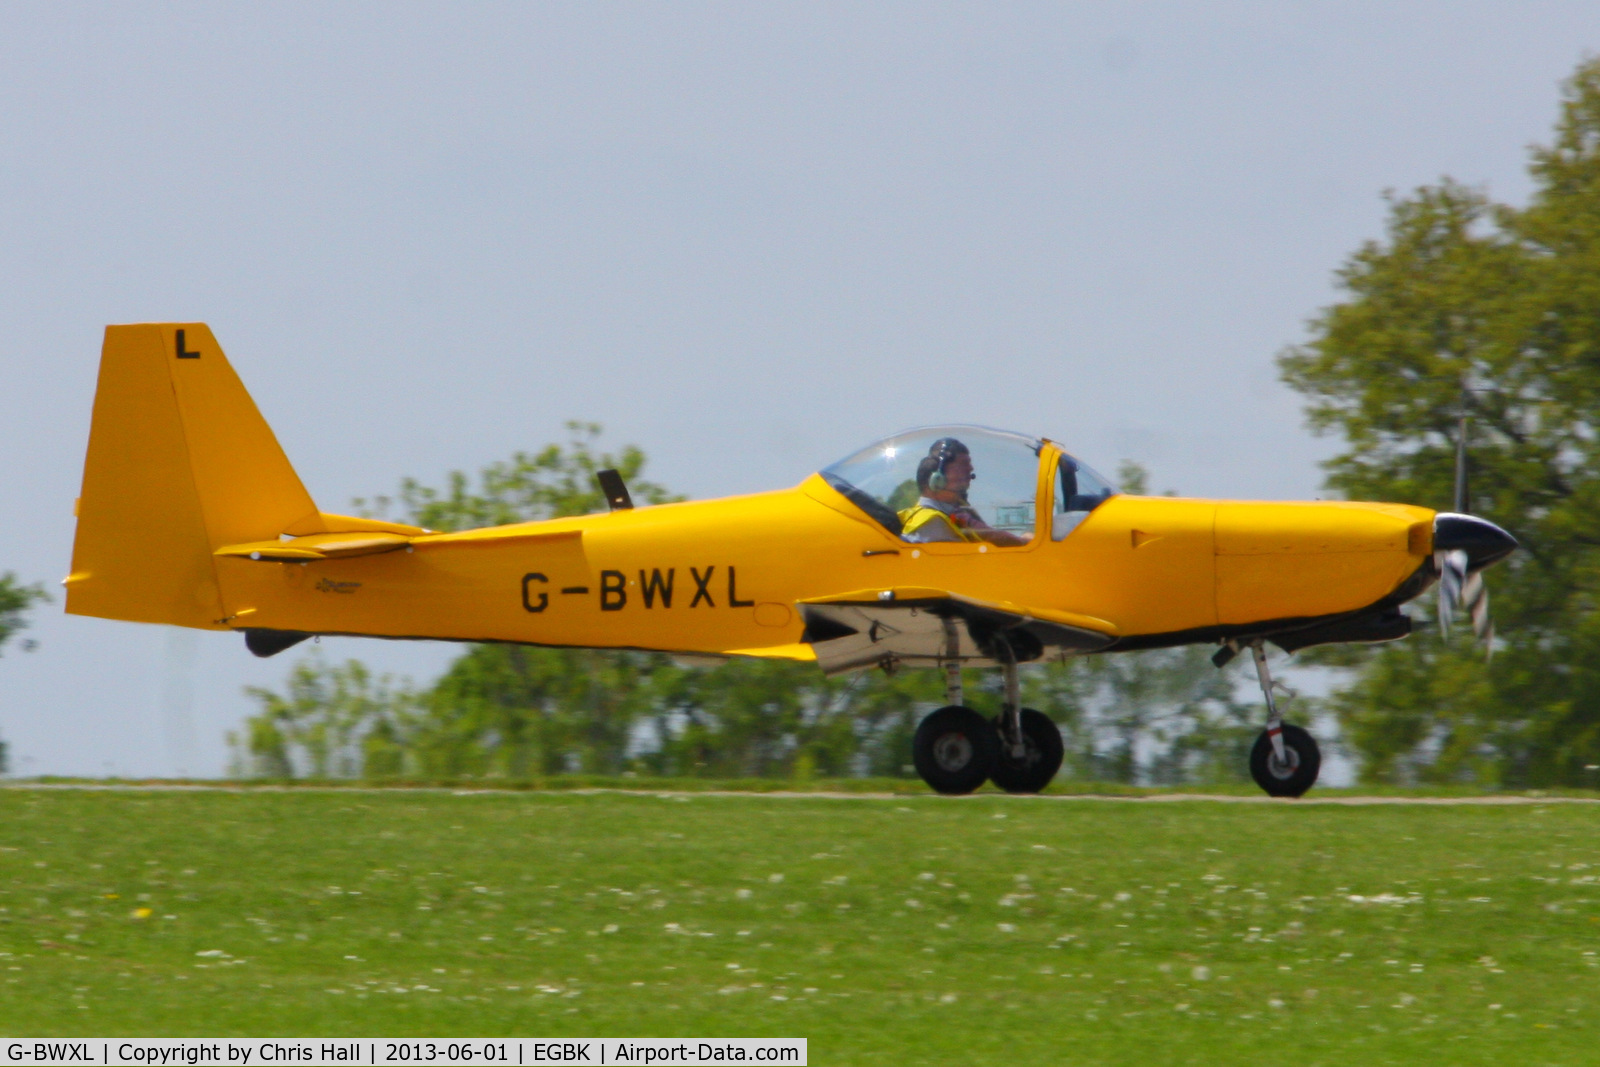 G-BWXL, 1996 Slingsby T-67M-260 Firefly C/N 2247, at AeroExpo 2013